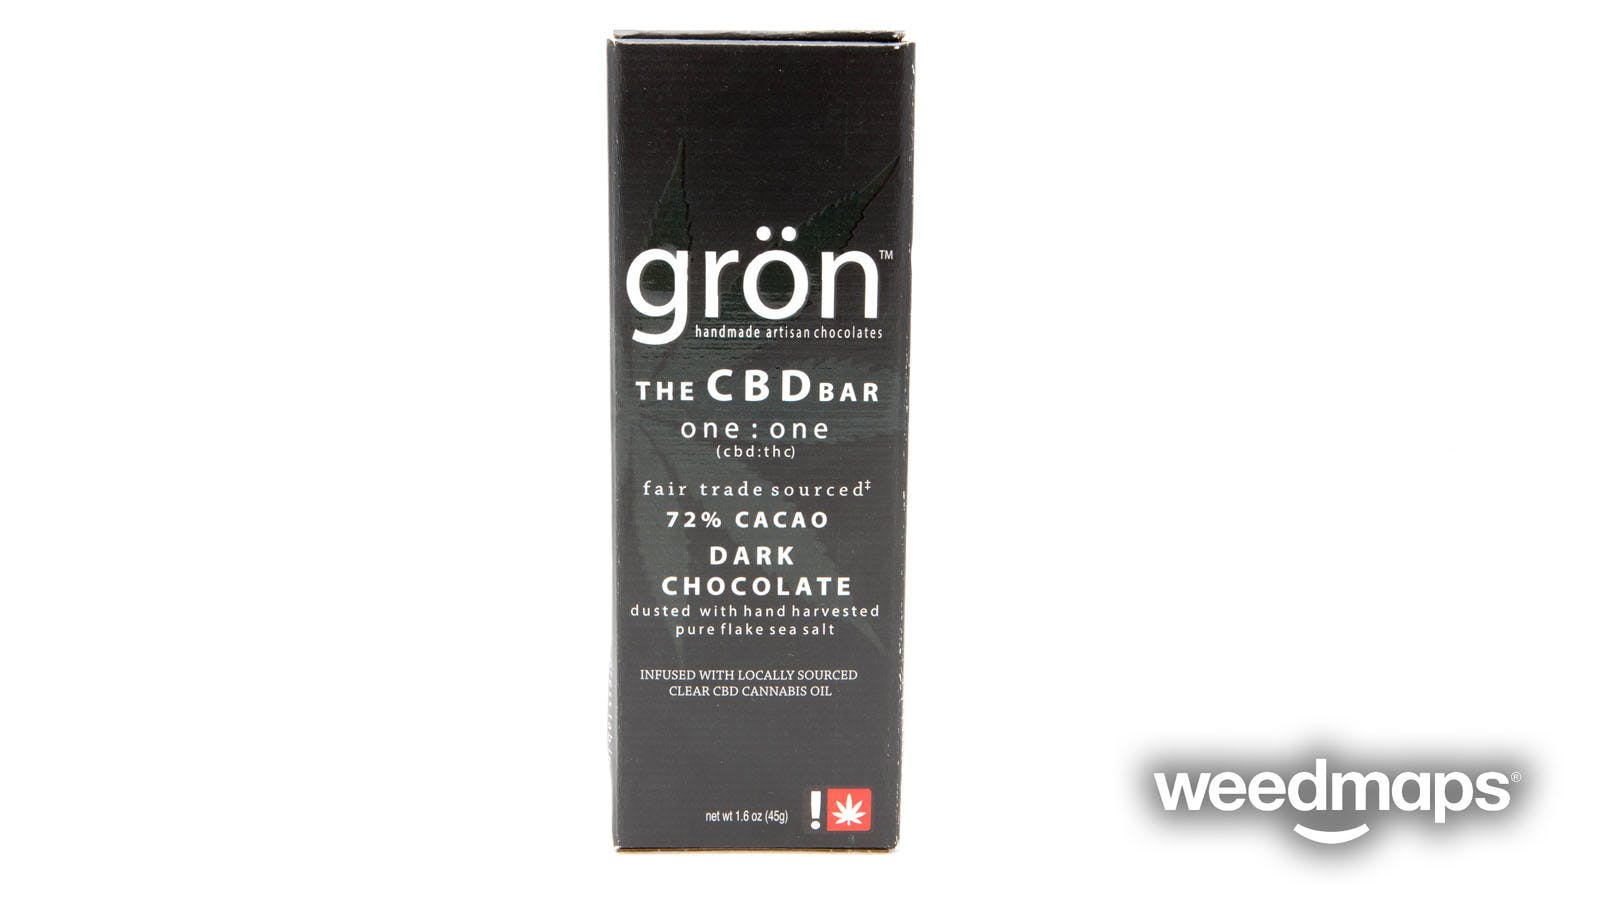 edible-gron-11-thccbd-dark-chocolate-bar